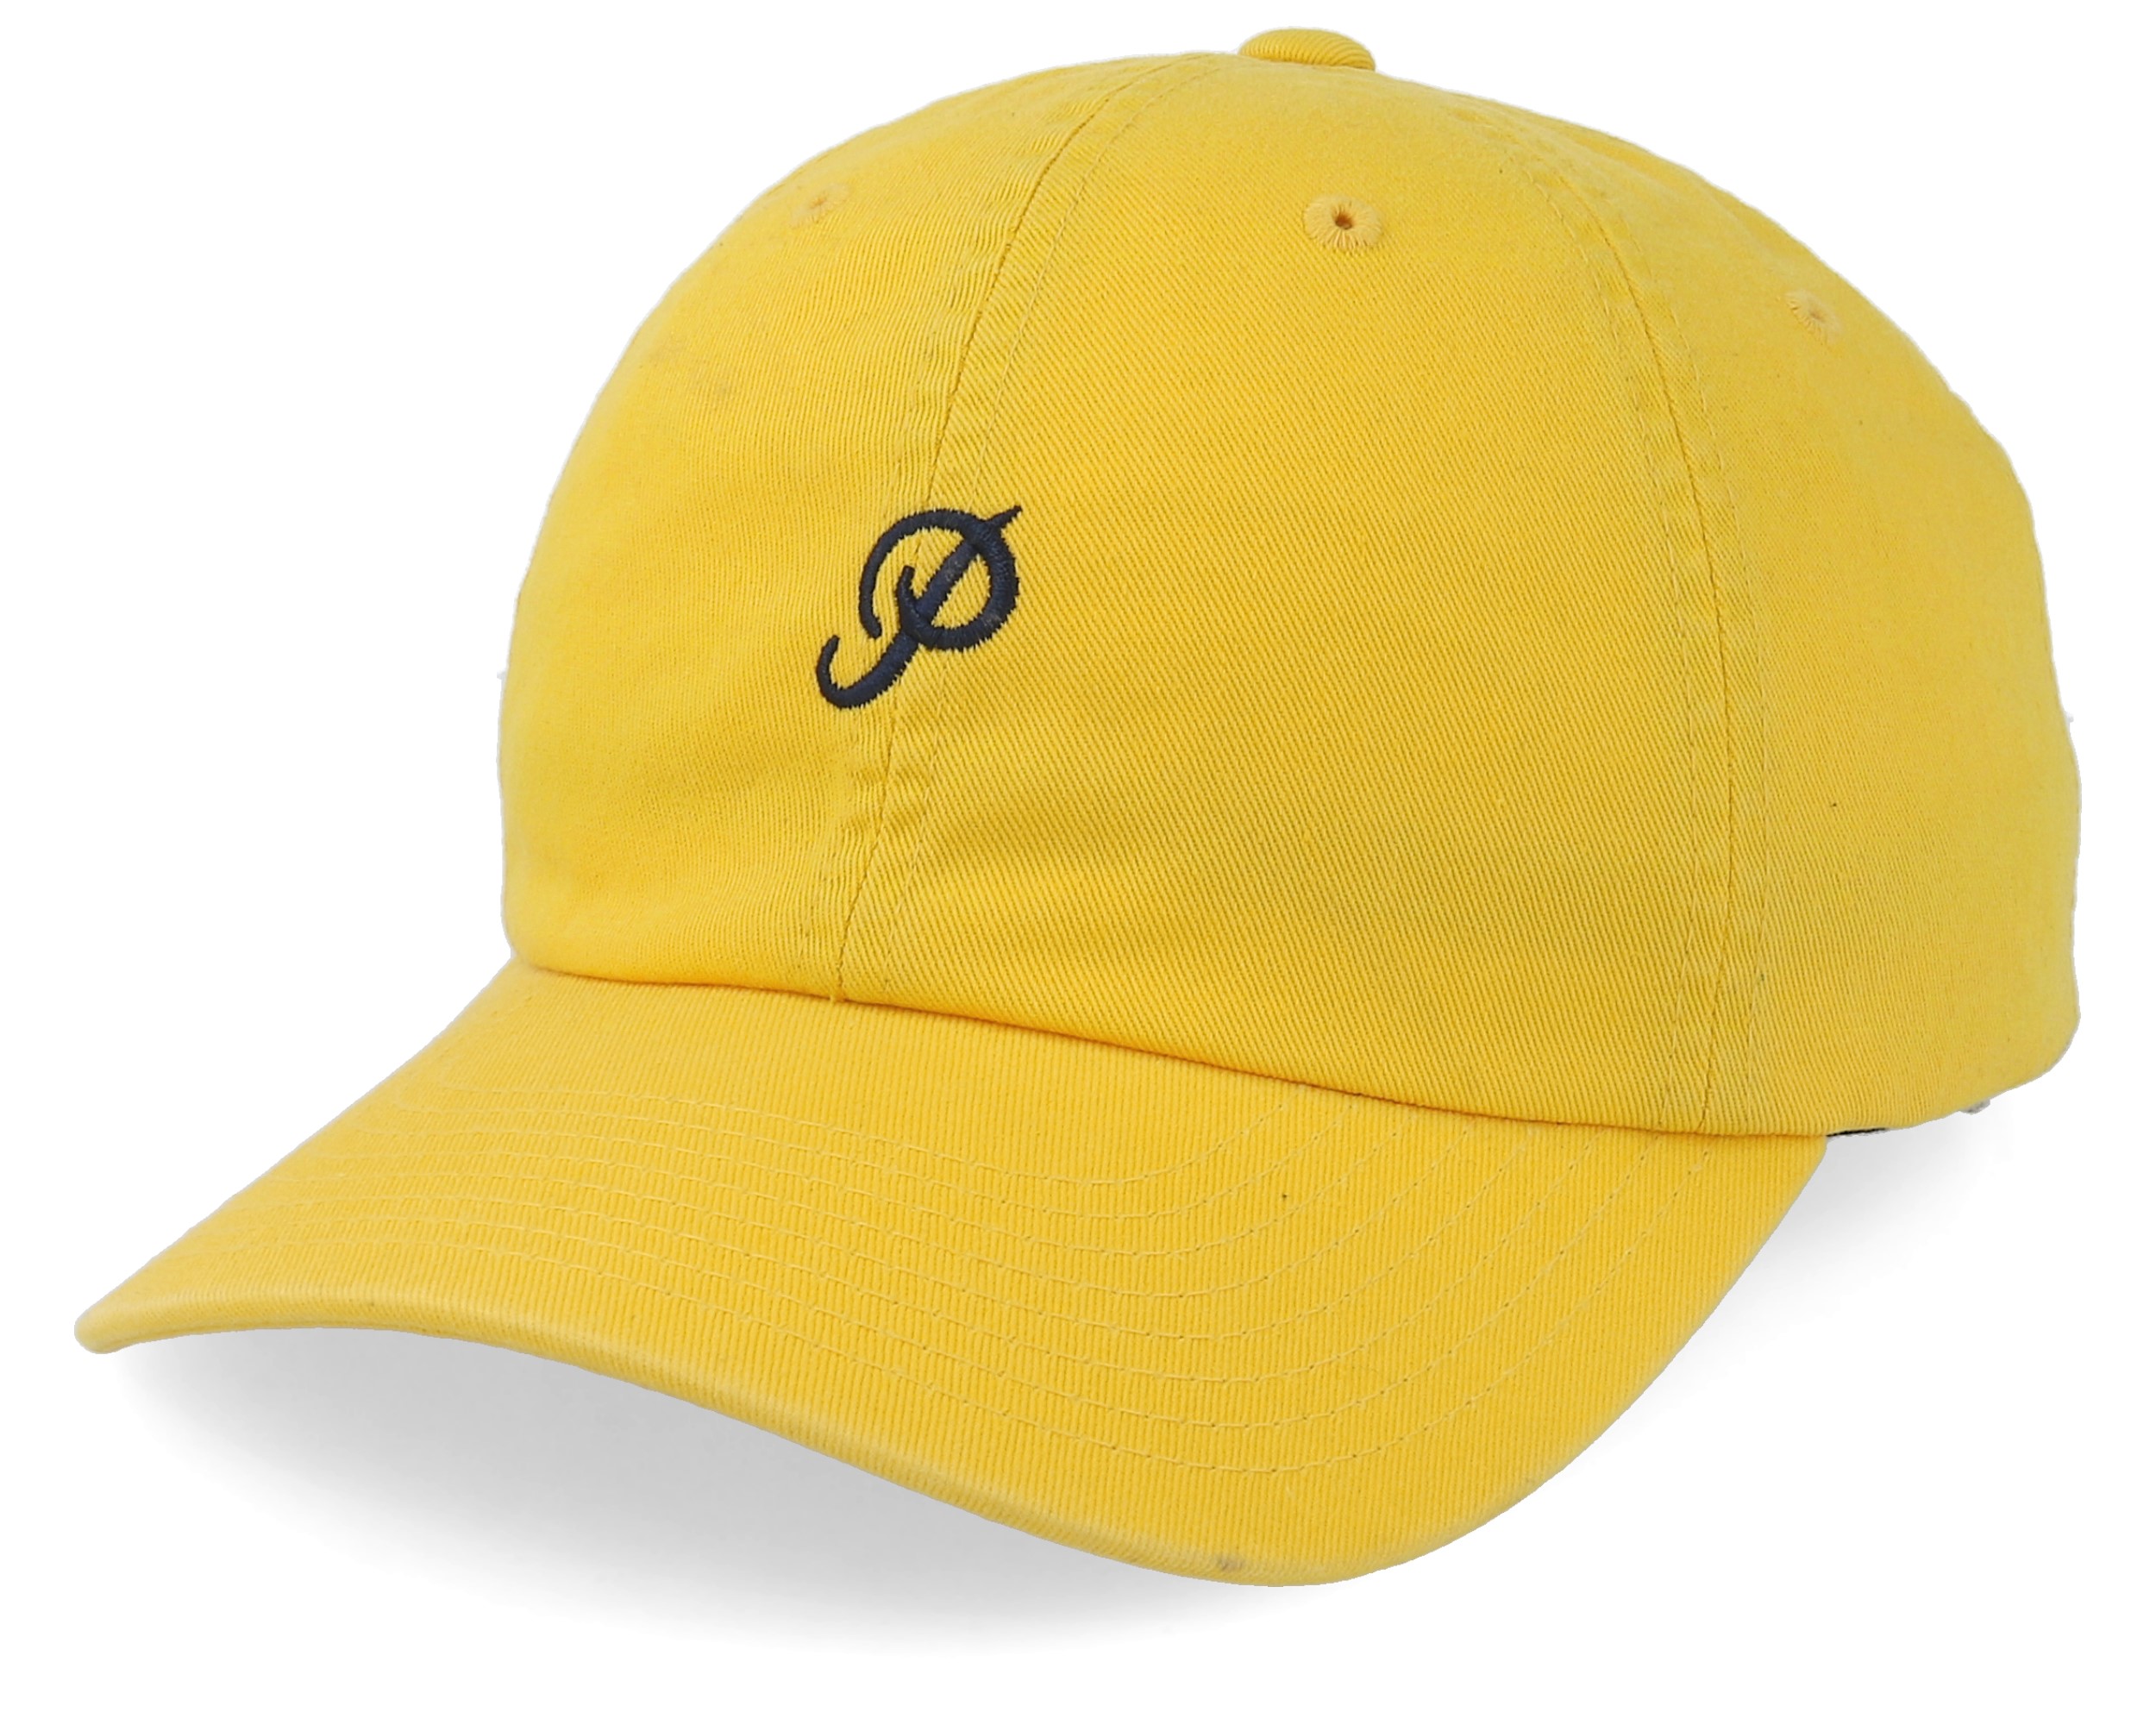 Hat p. Apparels Кепки. Yellow cap. Yellow p cap. Yellow cap картинка для детей.